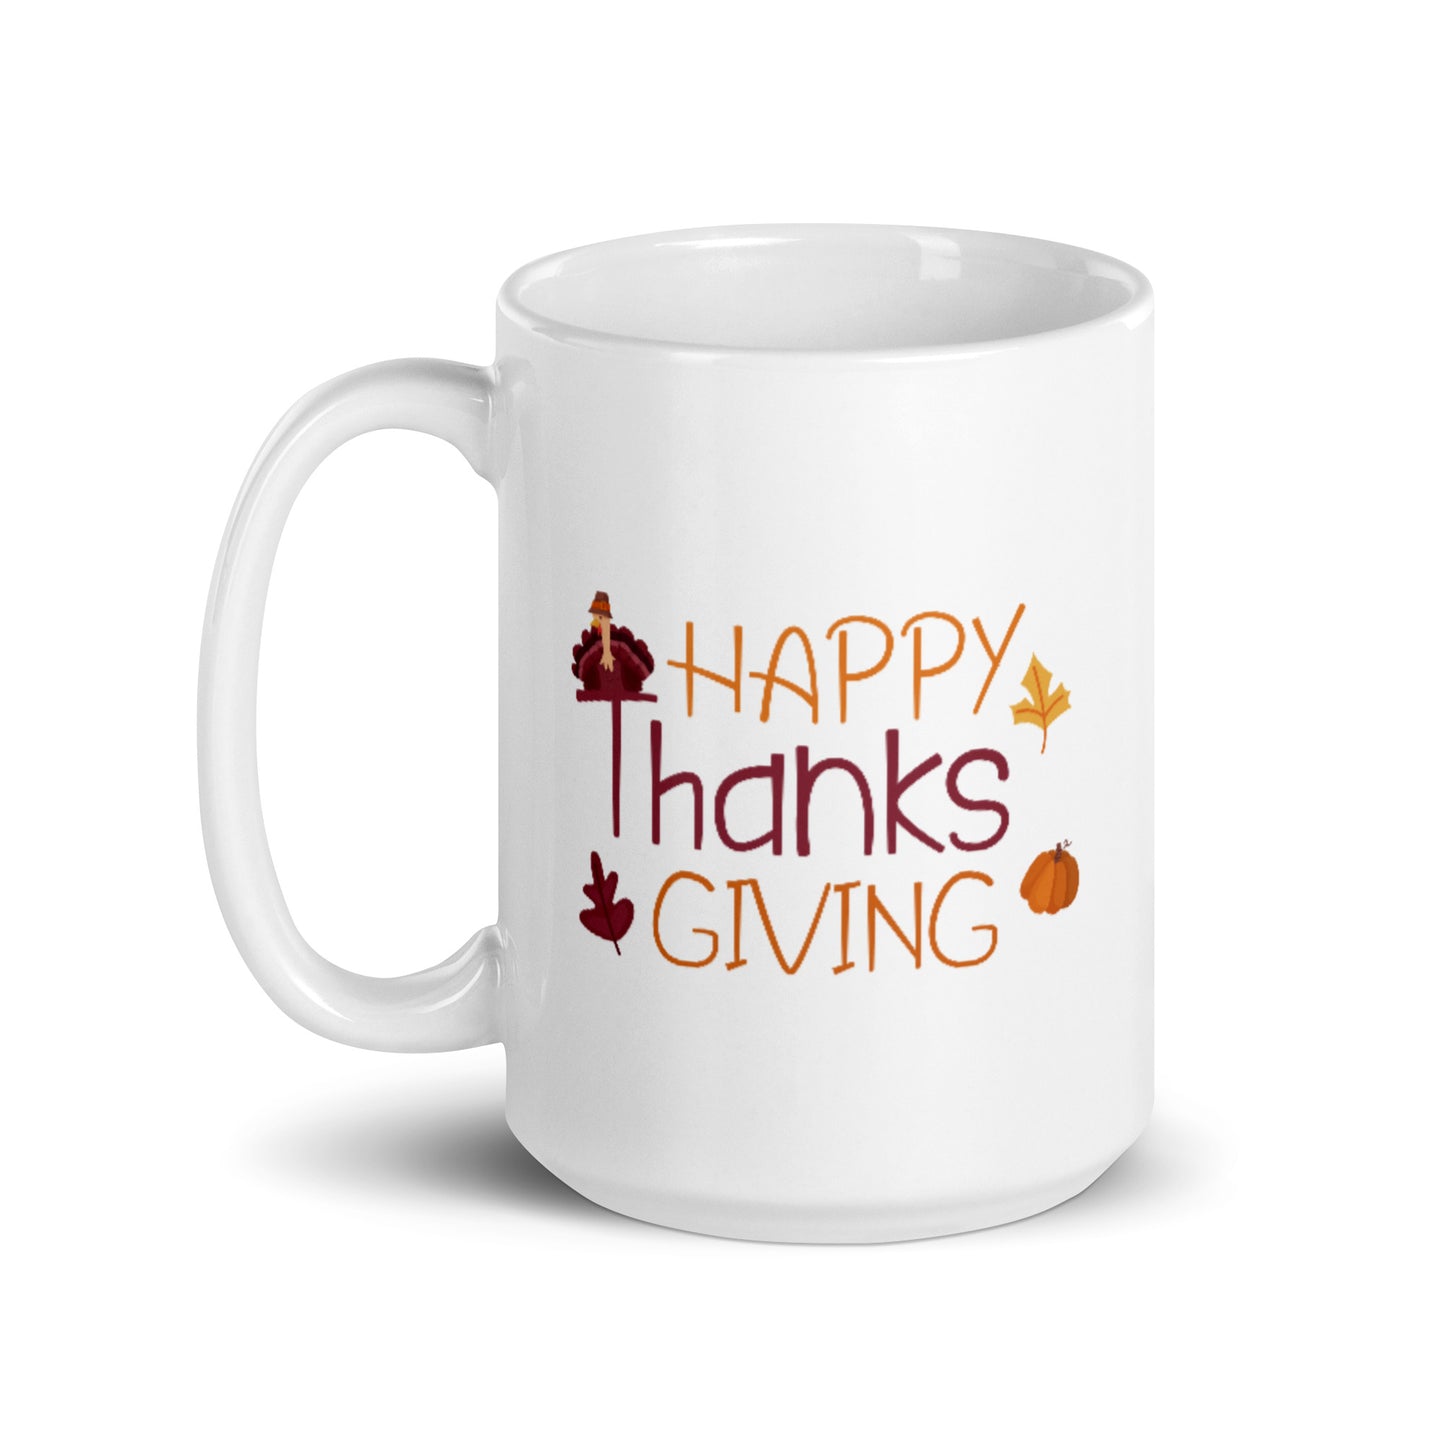 Happy Thanksgiving White glossy mug